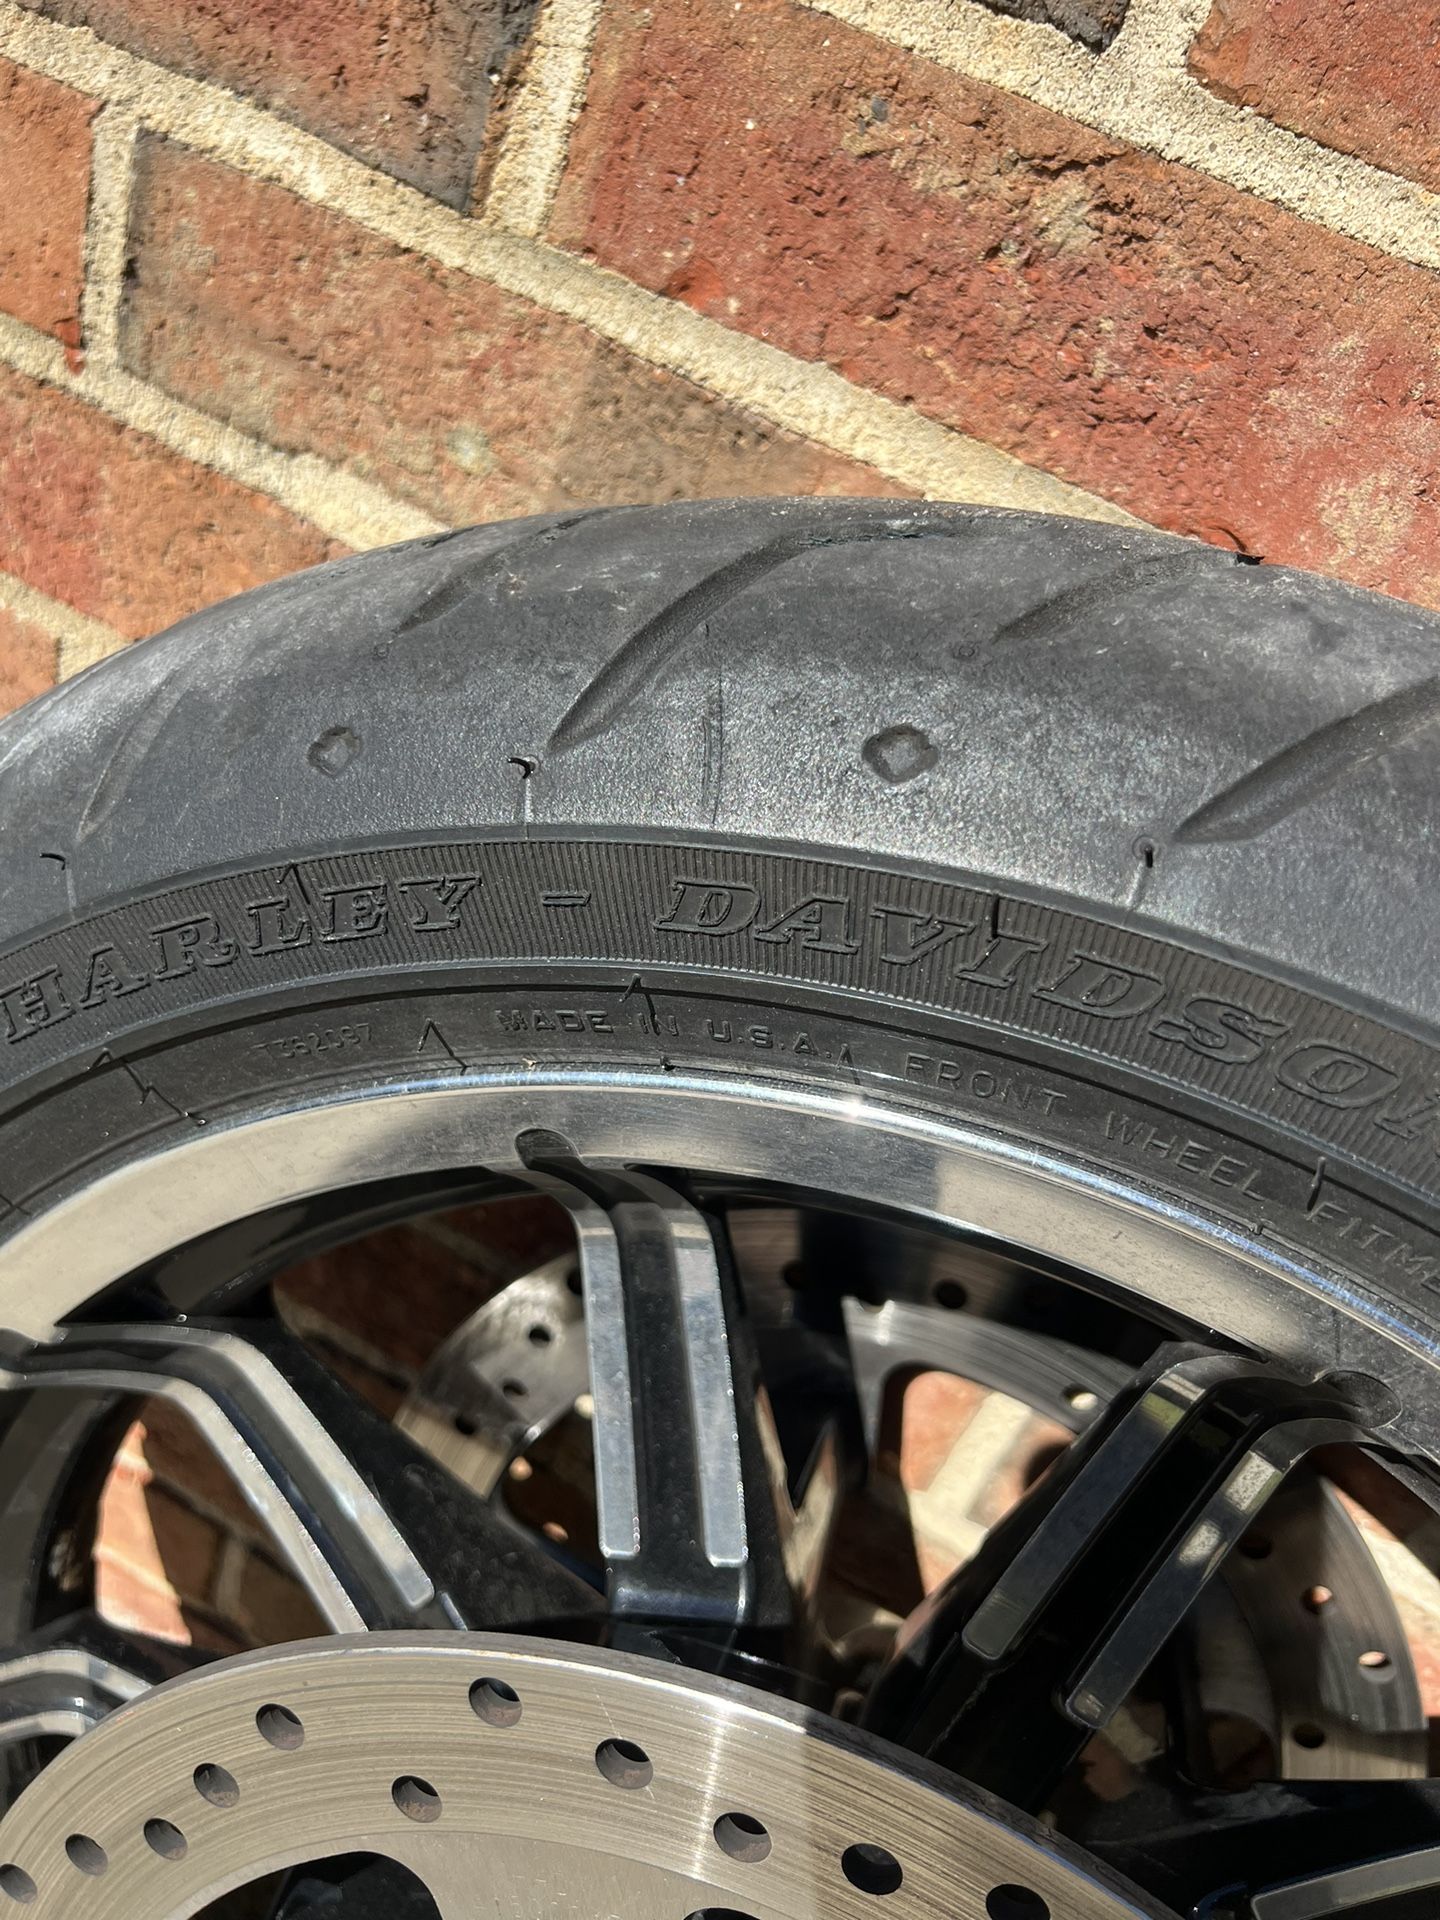 2017 Harley Davidson Front Tire  Rim And Rotor